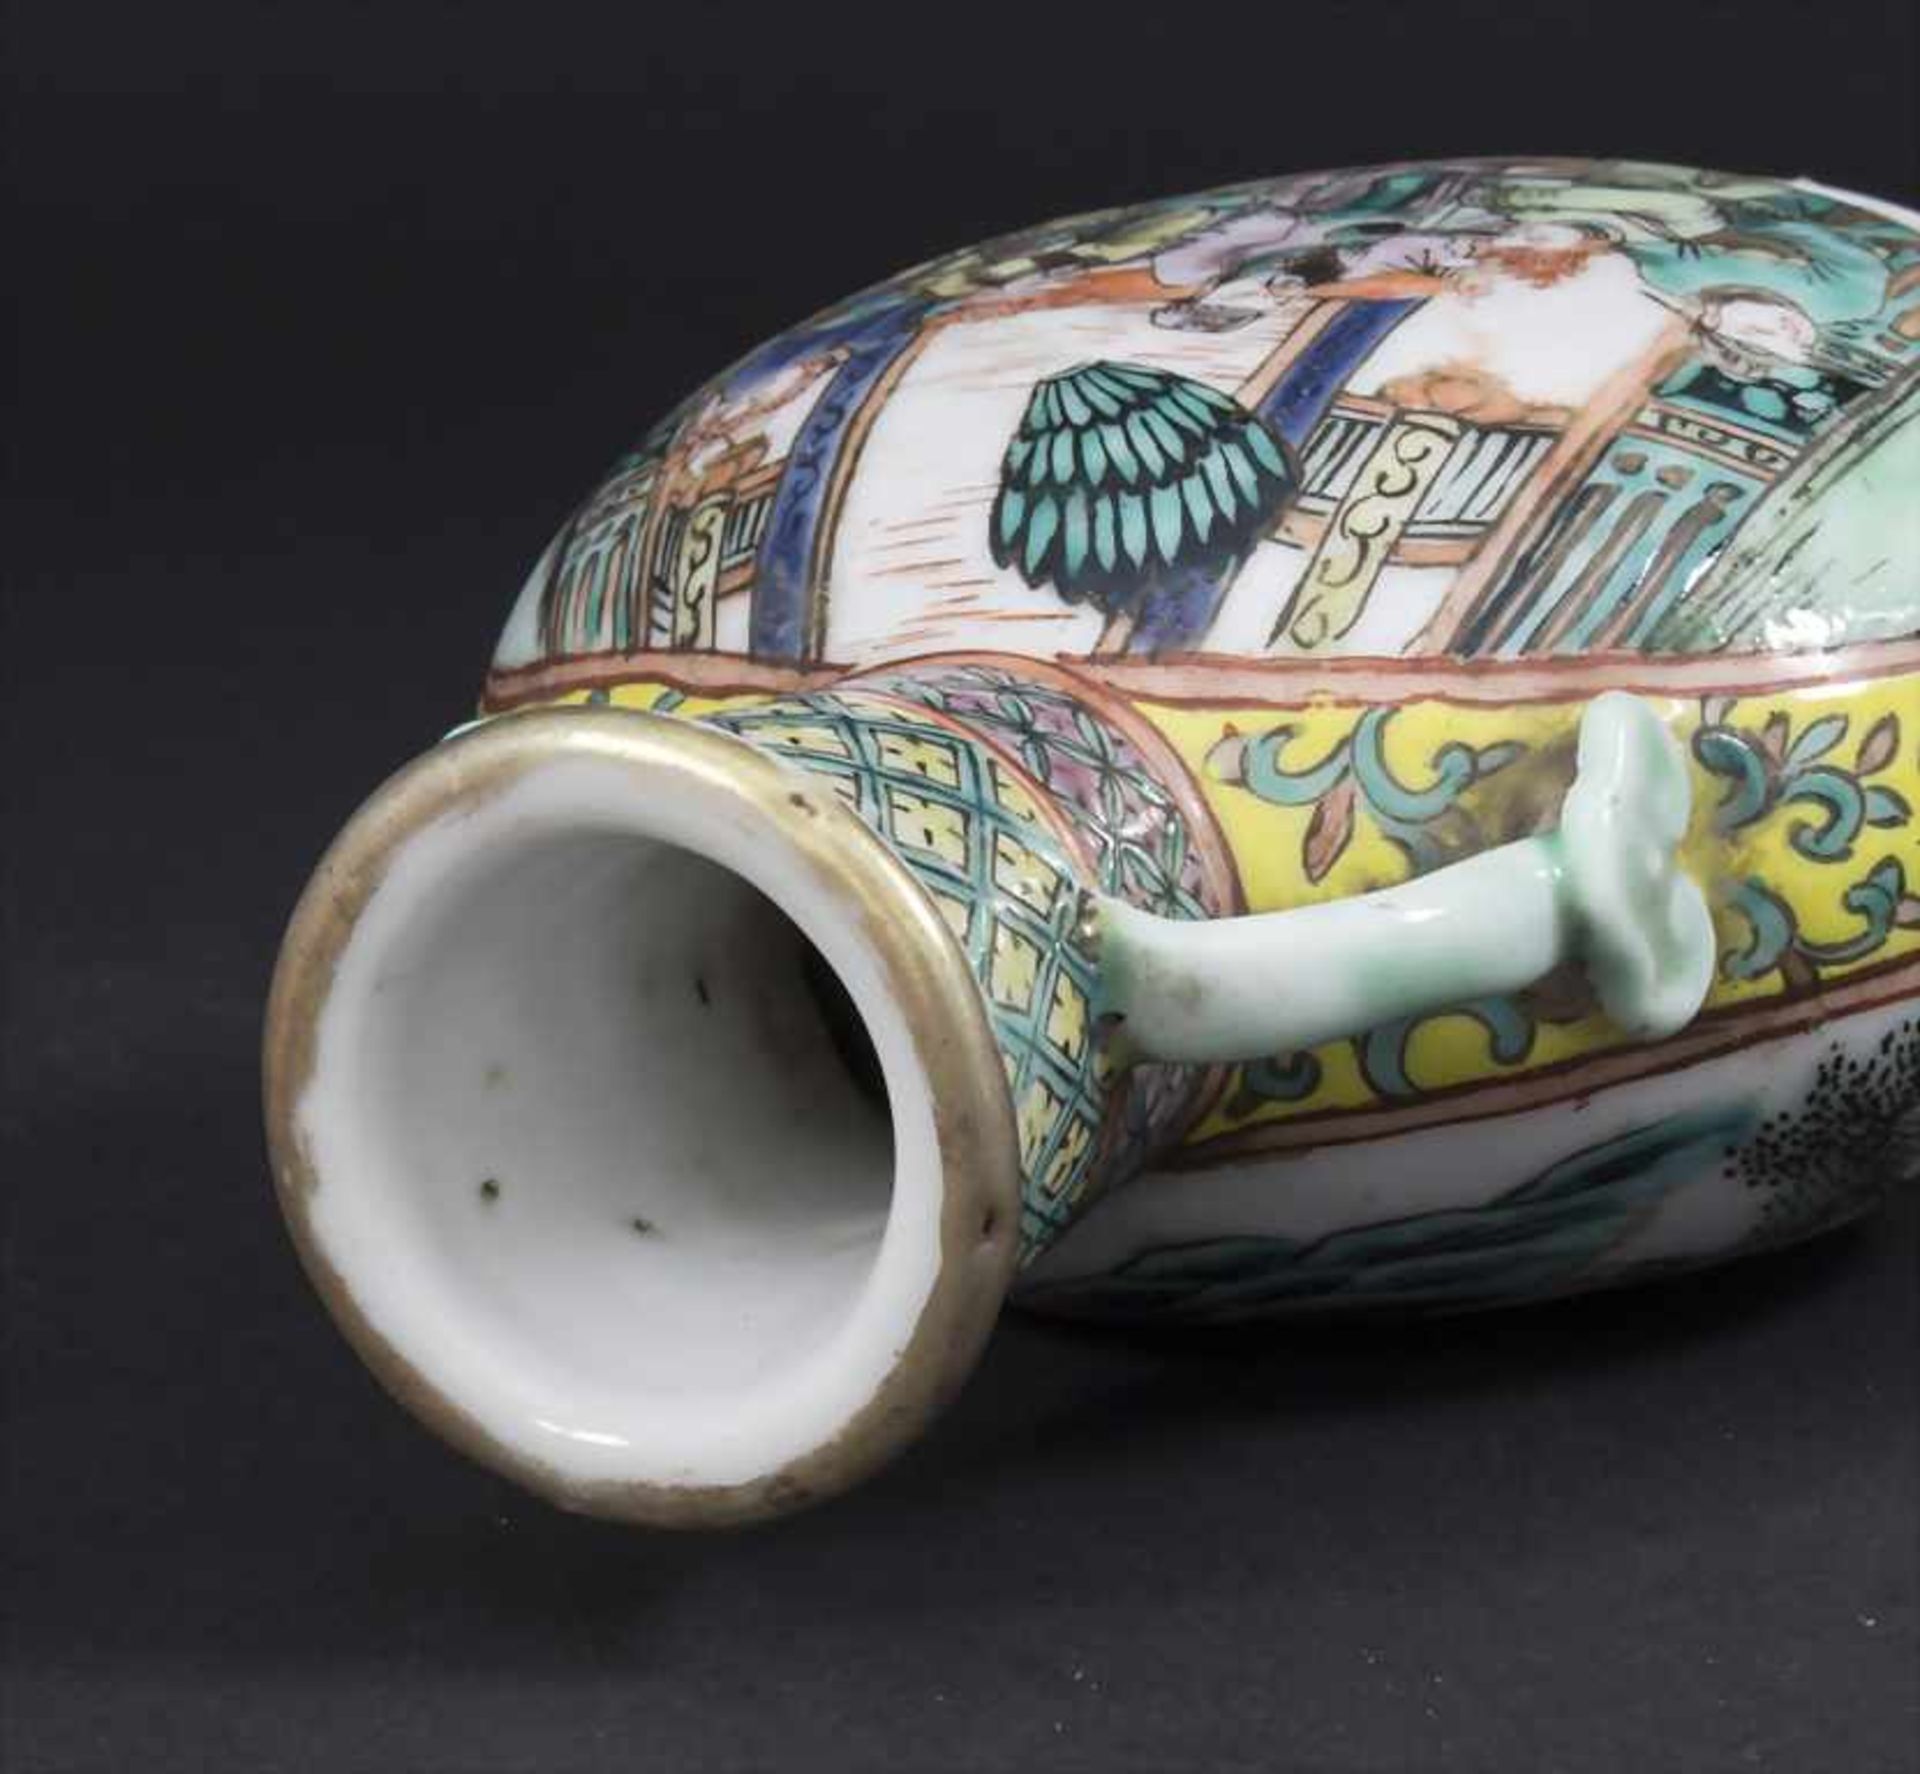 Porzellan-Ziervase / A porcelain decorative vase, China, Qing-Dynastie (1644-1911) - Image 8 of 9